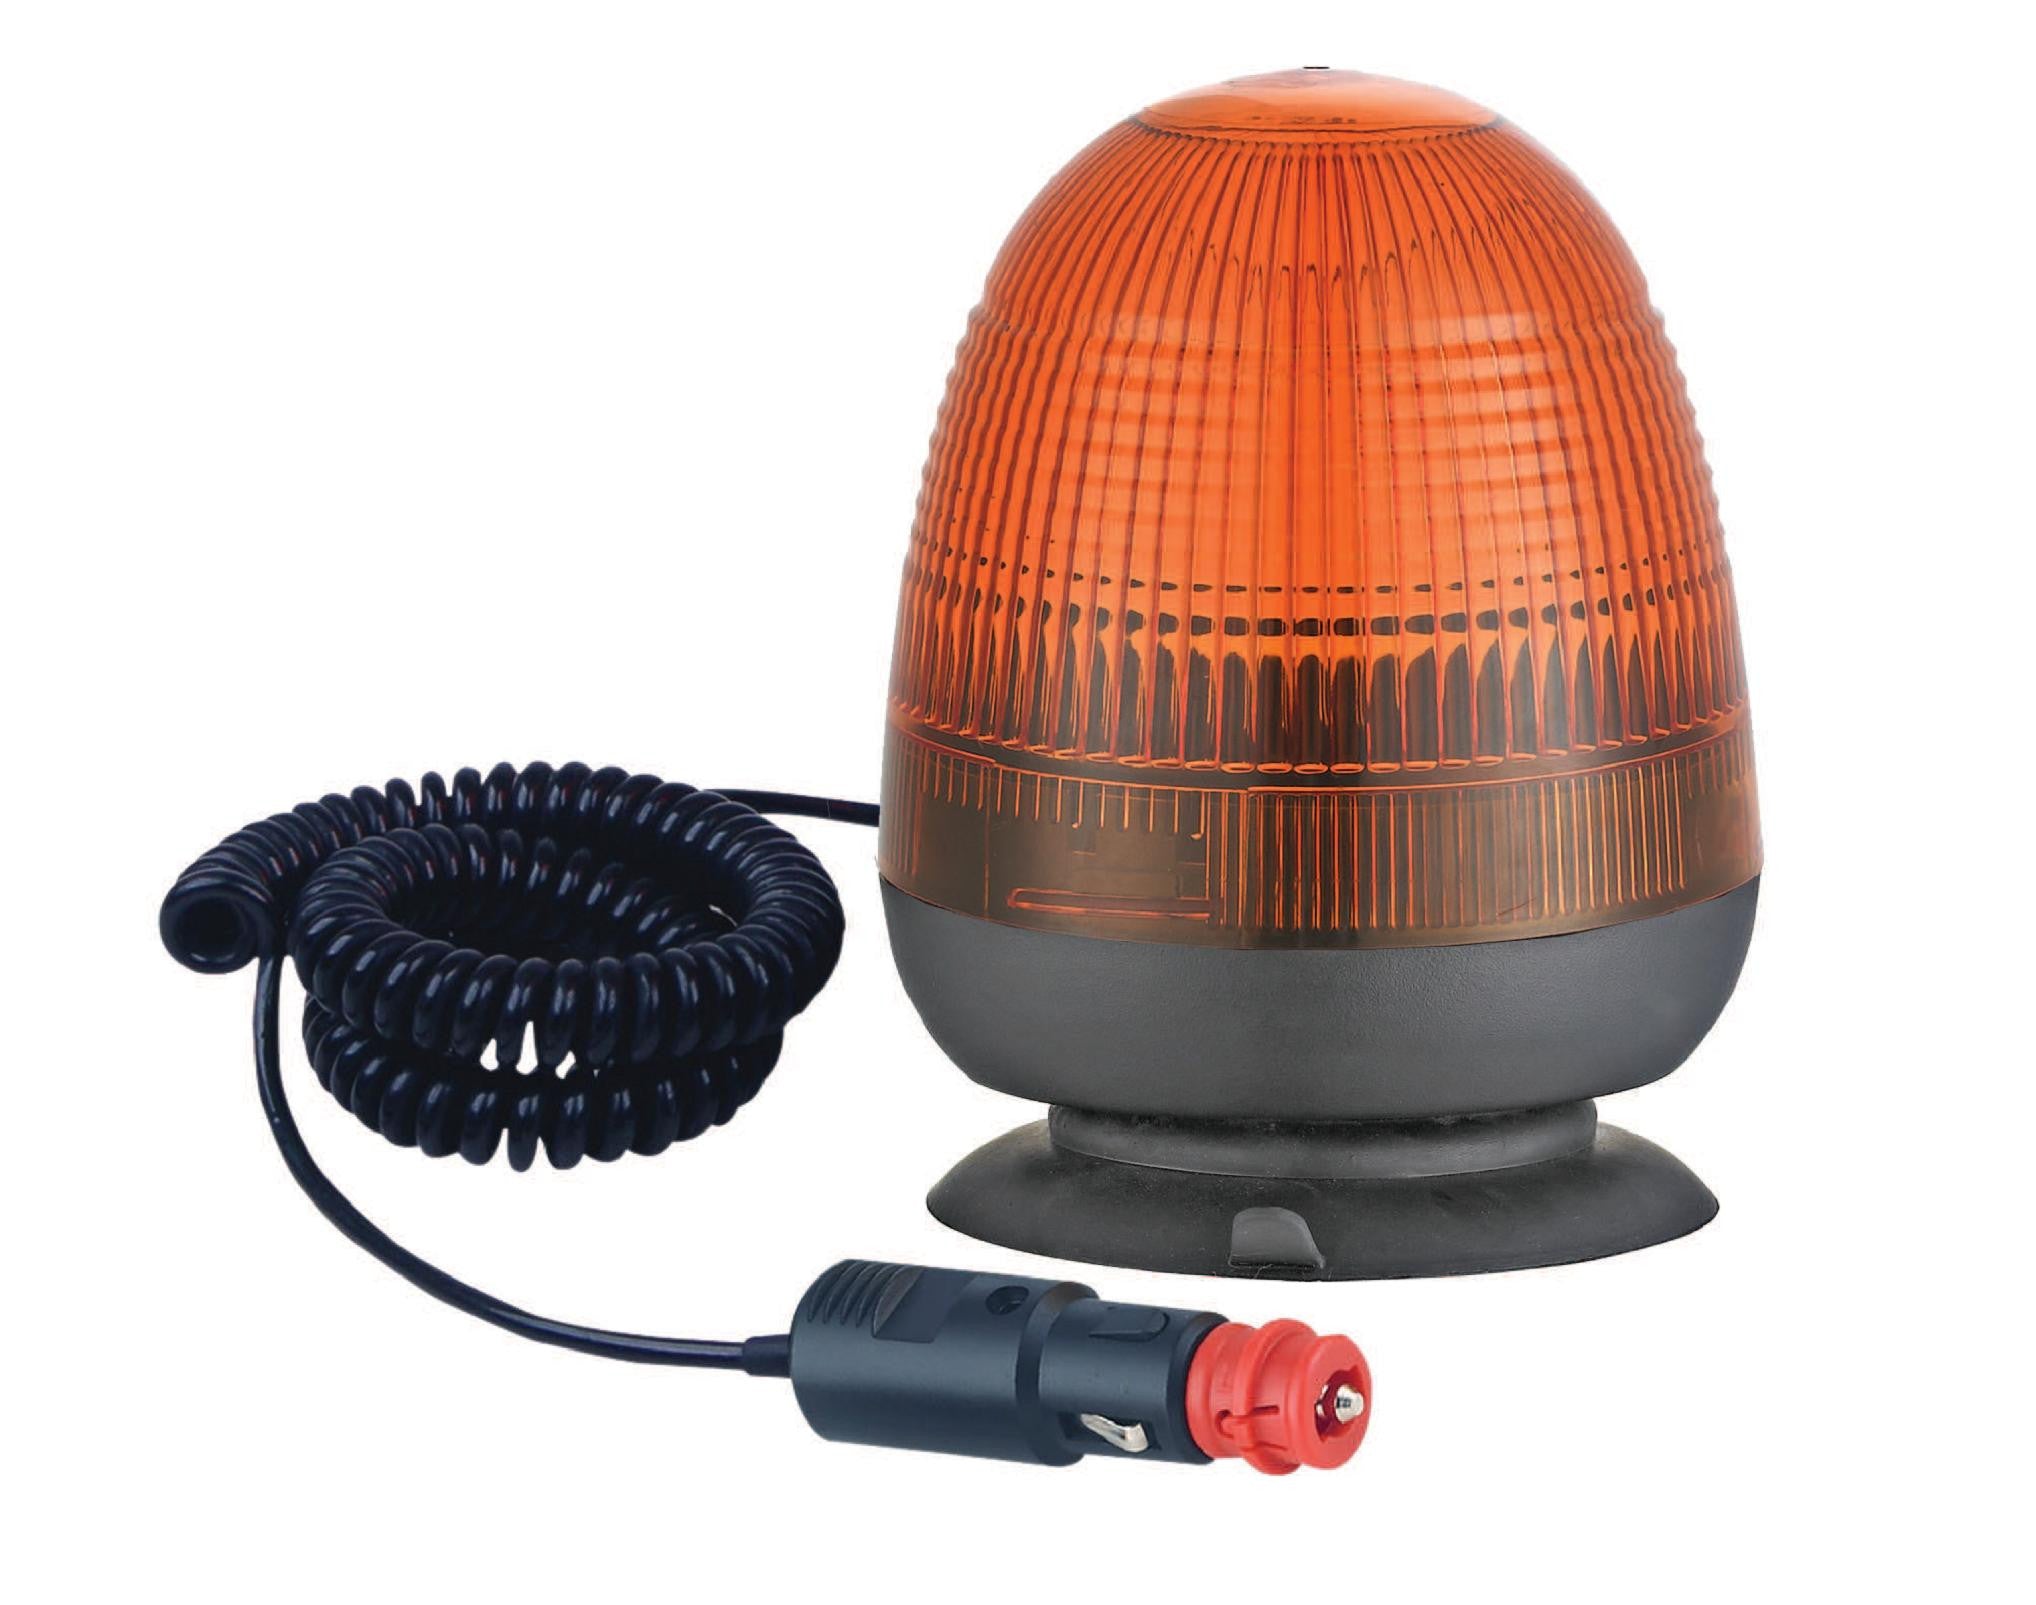 LED Beacon / Magnetic 12/24v - Beacons - Bin:A4 - spo-cs-disabled - spo-default - spo-disabled - spo-notify-me-disabled